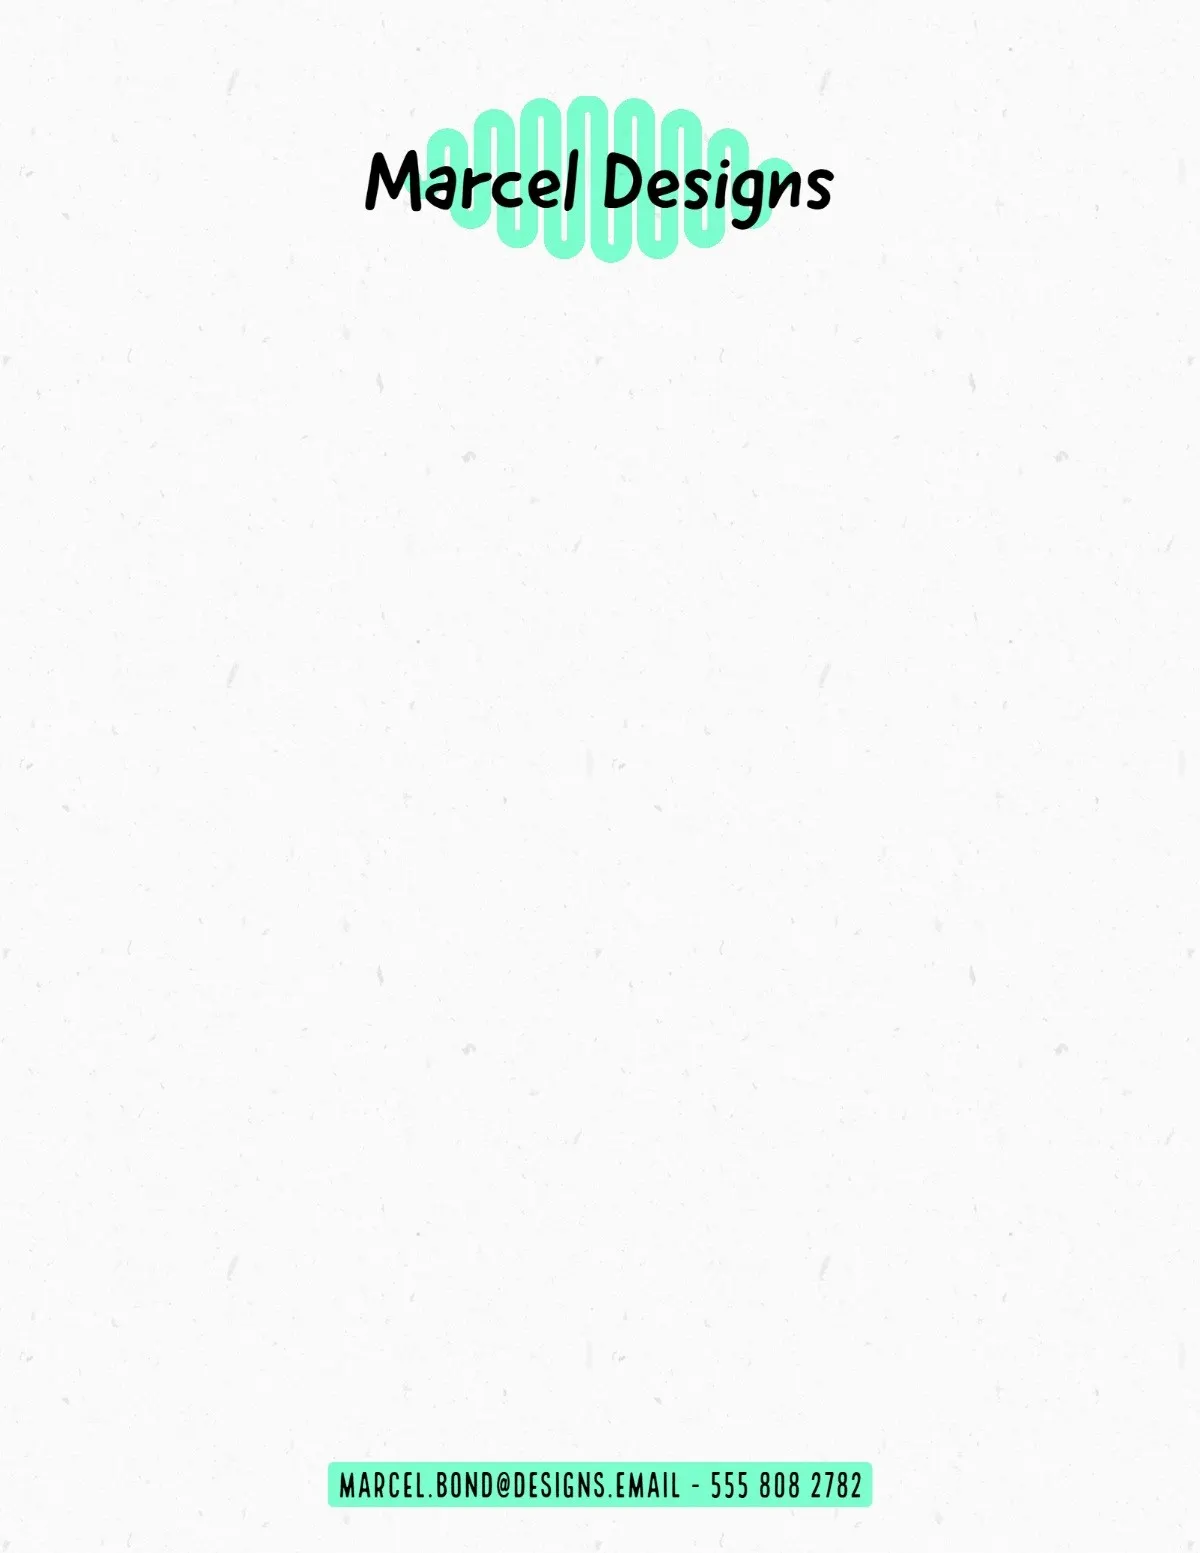 Teal Black Marcel Designs Letterhead